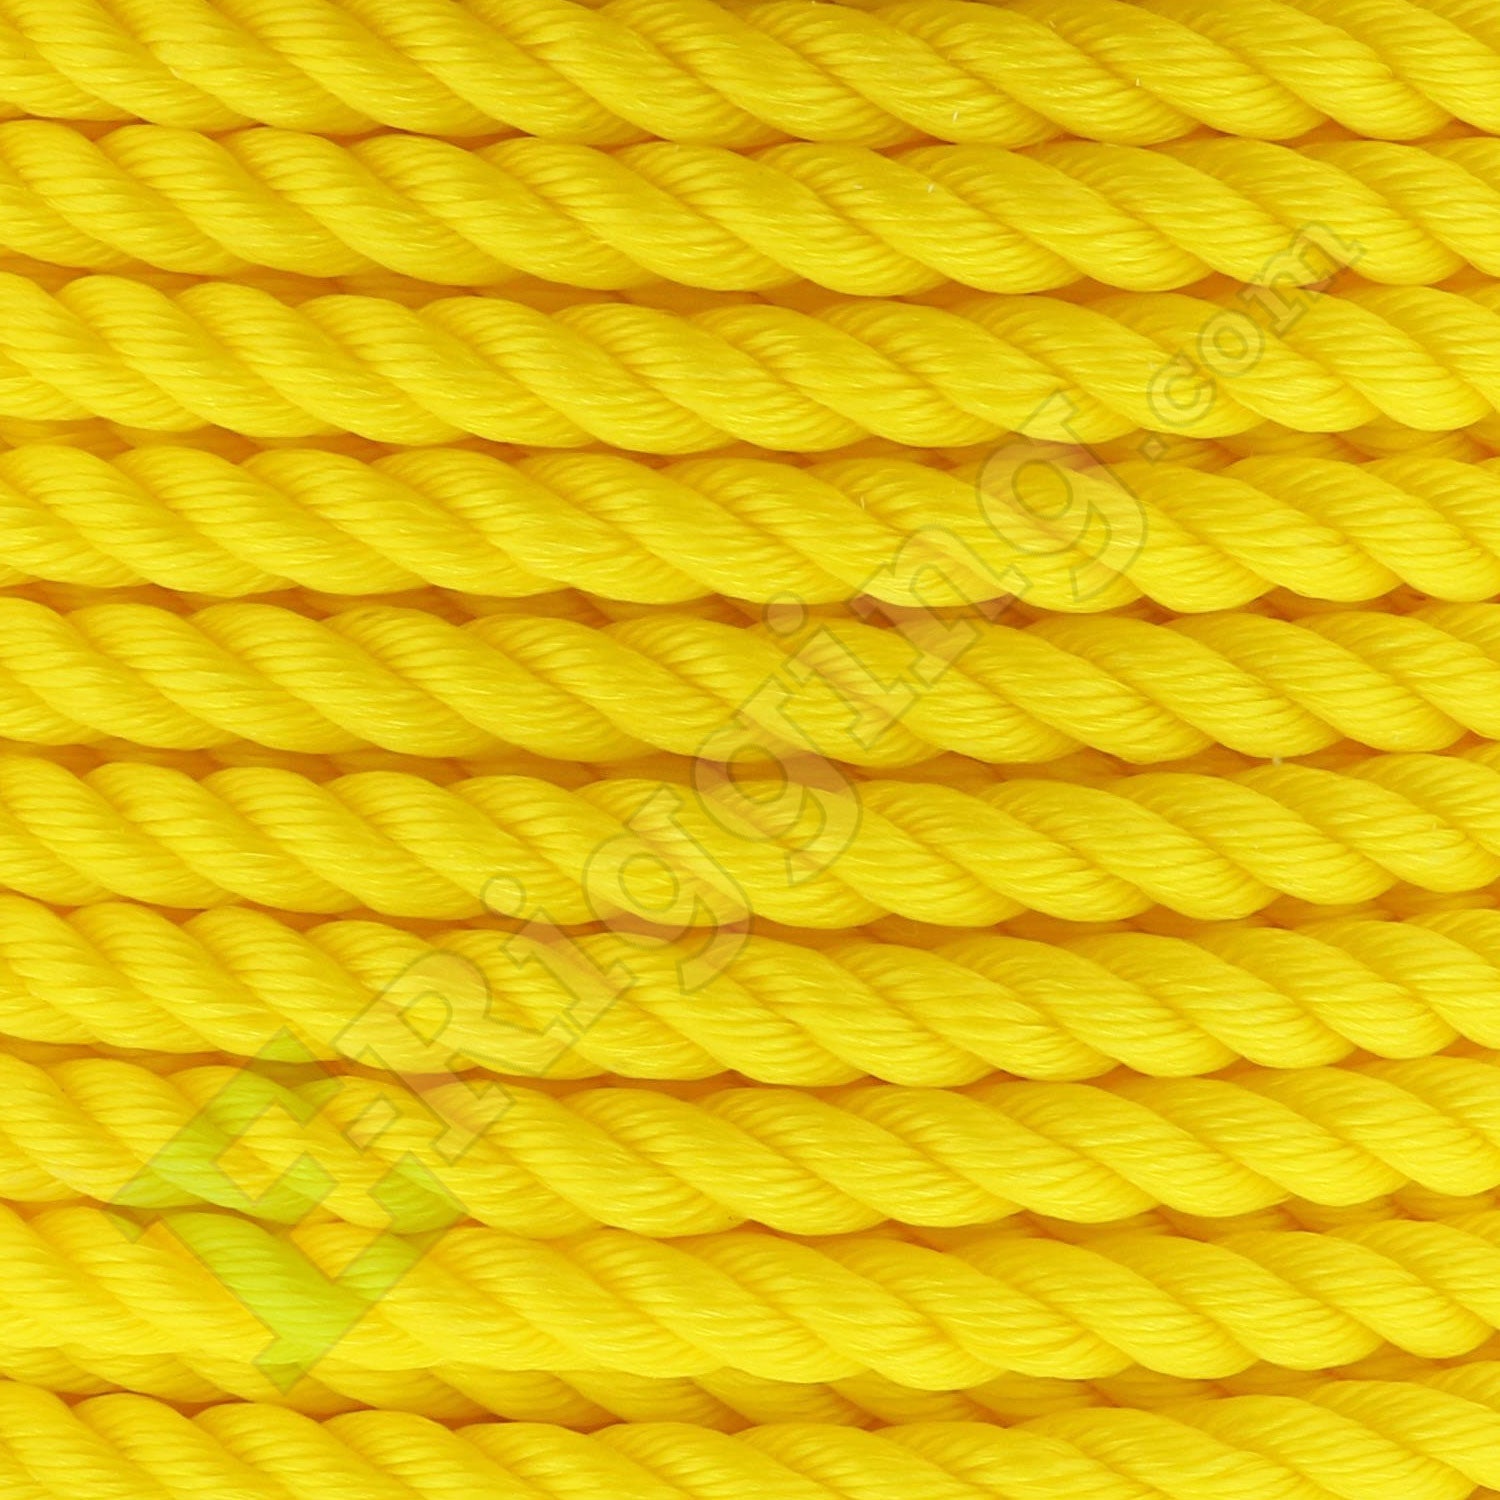 Yellow Sea-Strand 3/4 x 600 Reel 3-Strand Polypropylene Rope